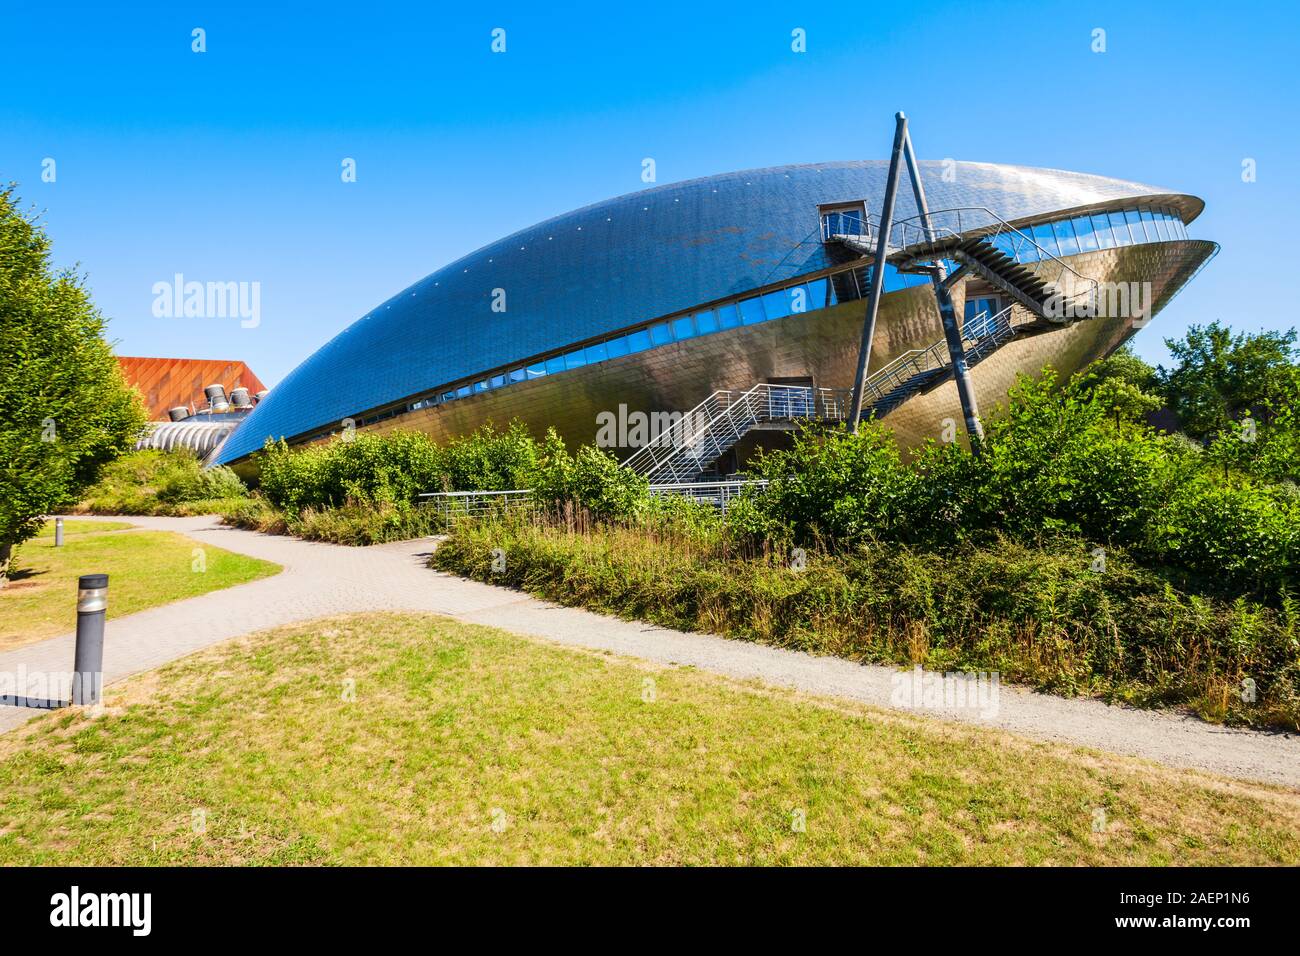 BREMEN, GERMANY - JULY 06, 2018: The Universum Bremen is a science museum in Bremen city, Germany Stock Photo